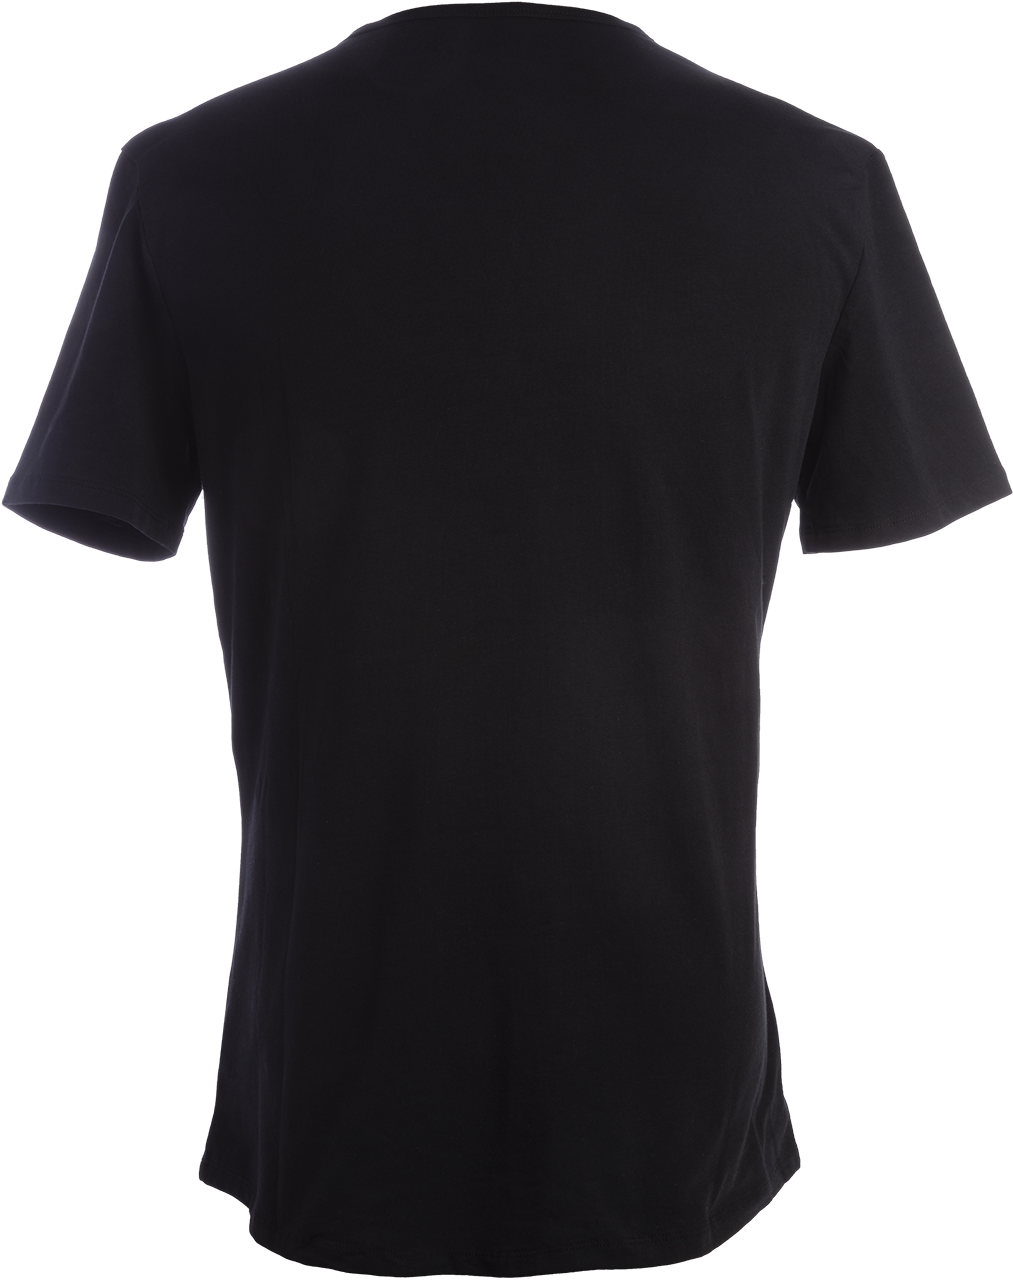 Spectacle Lifestyle Black Dress T-Shirt